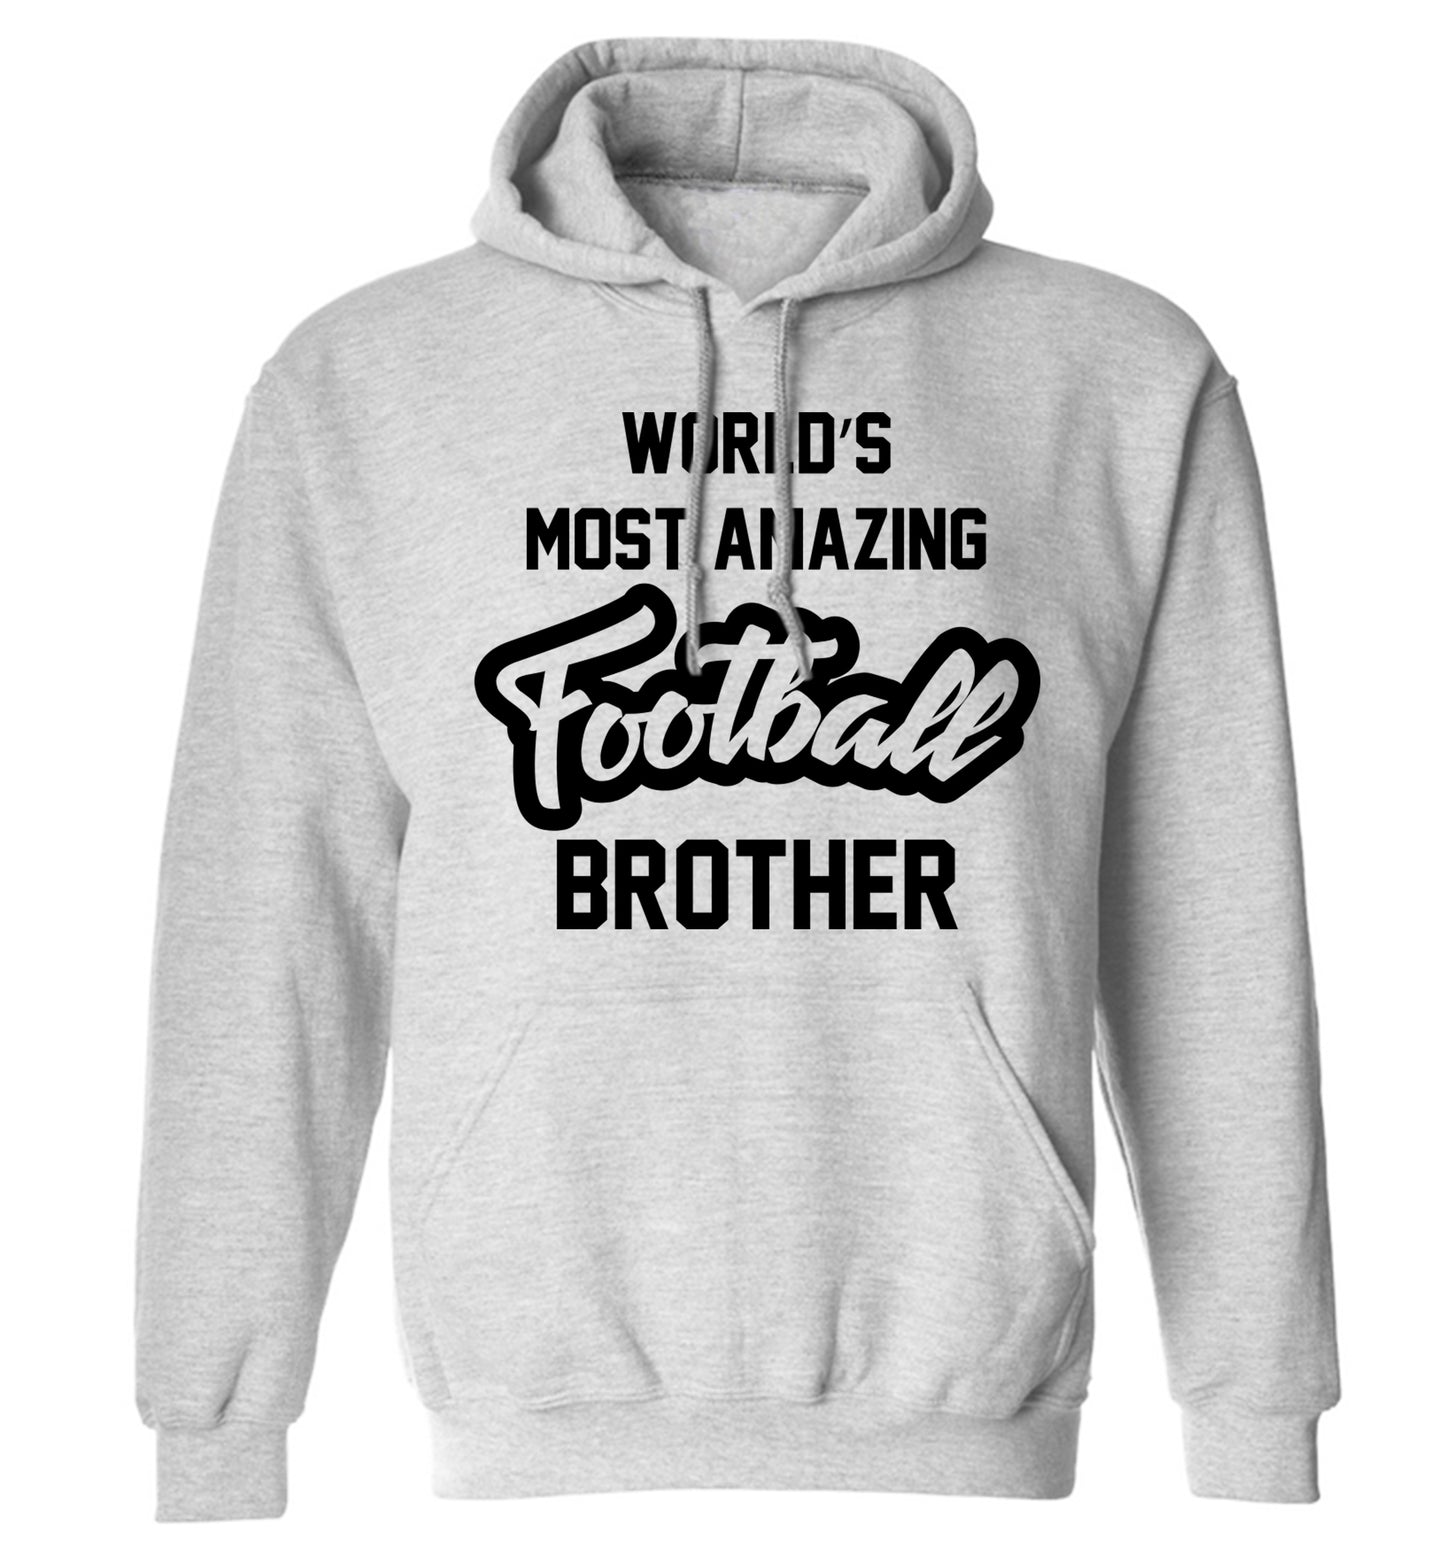 Worlds most amazing football brother adults unisexgrey hoodie 2XL